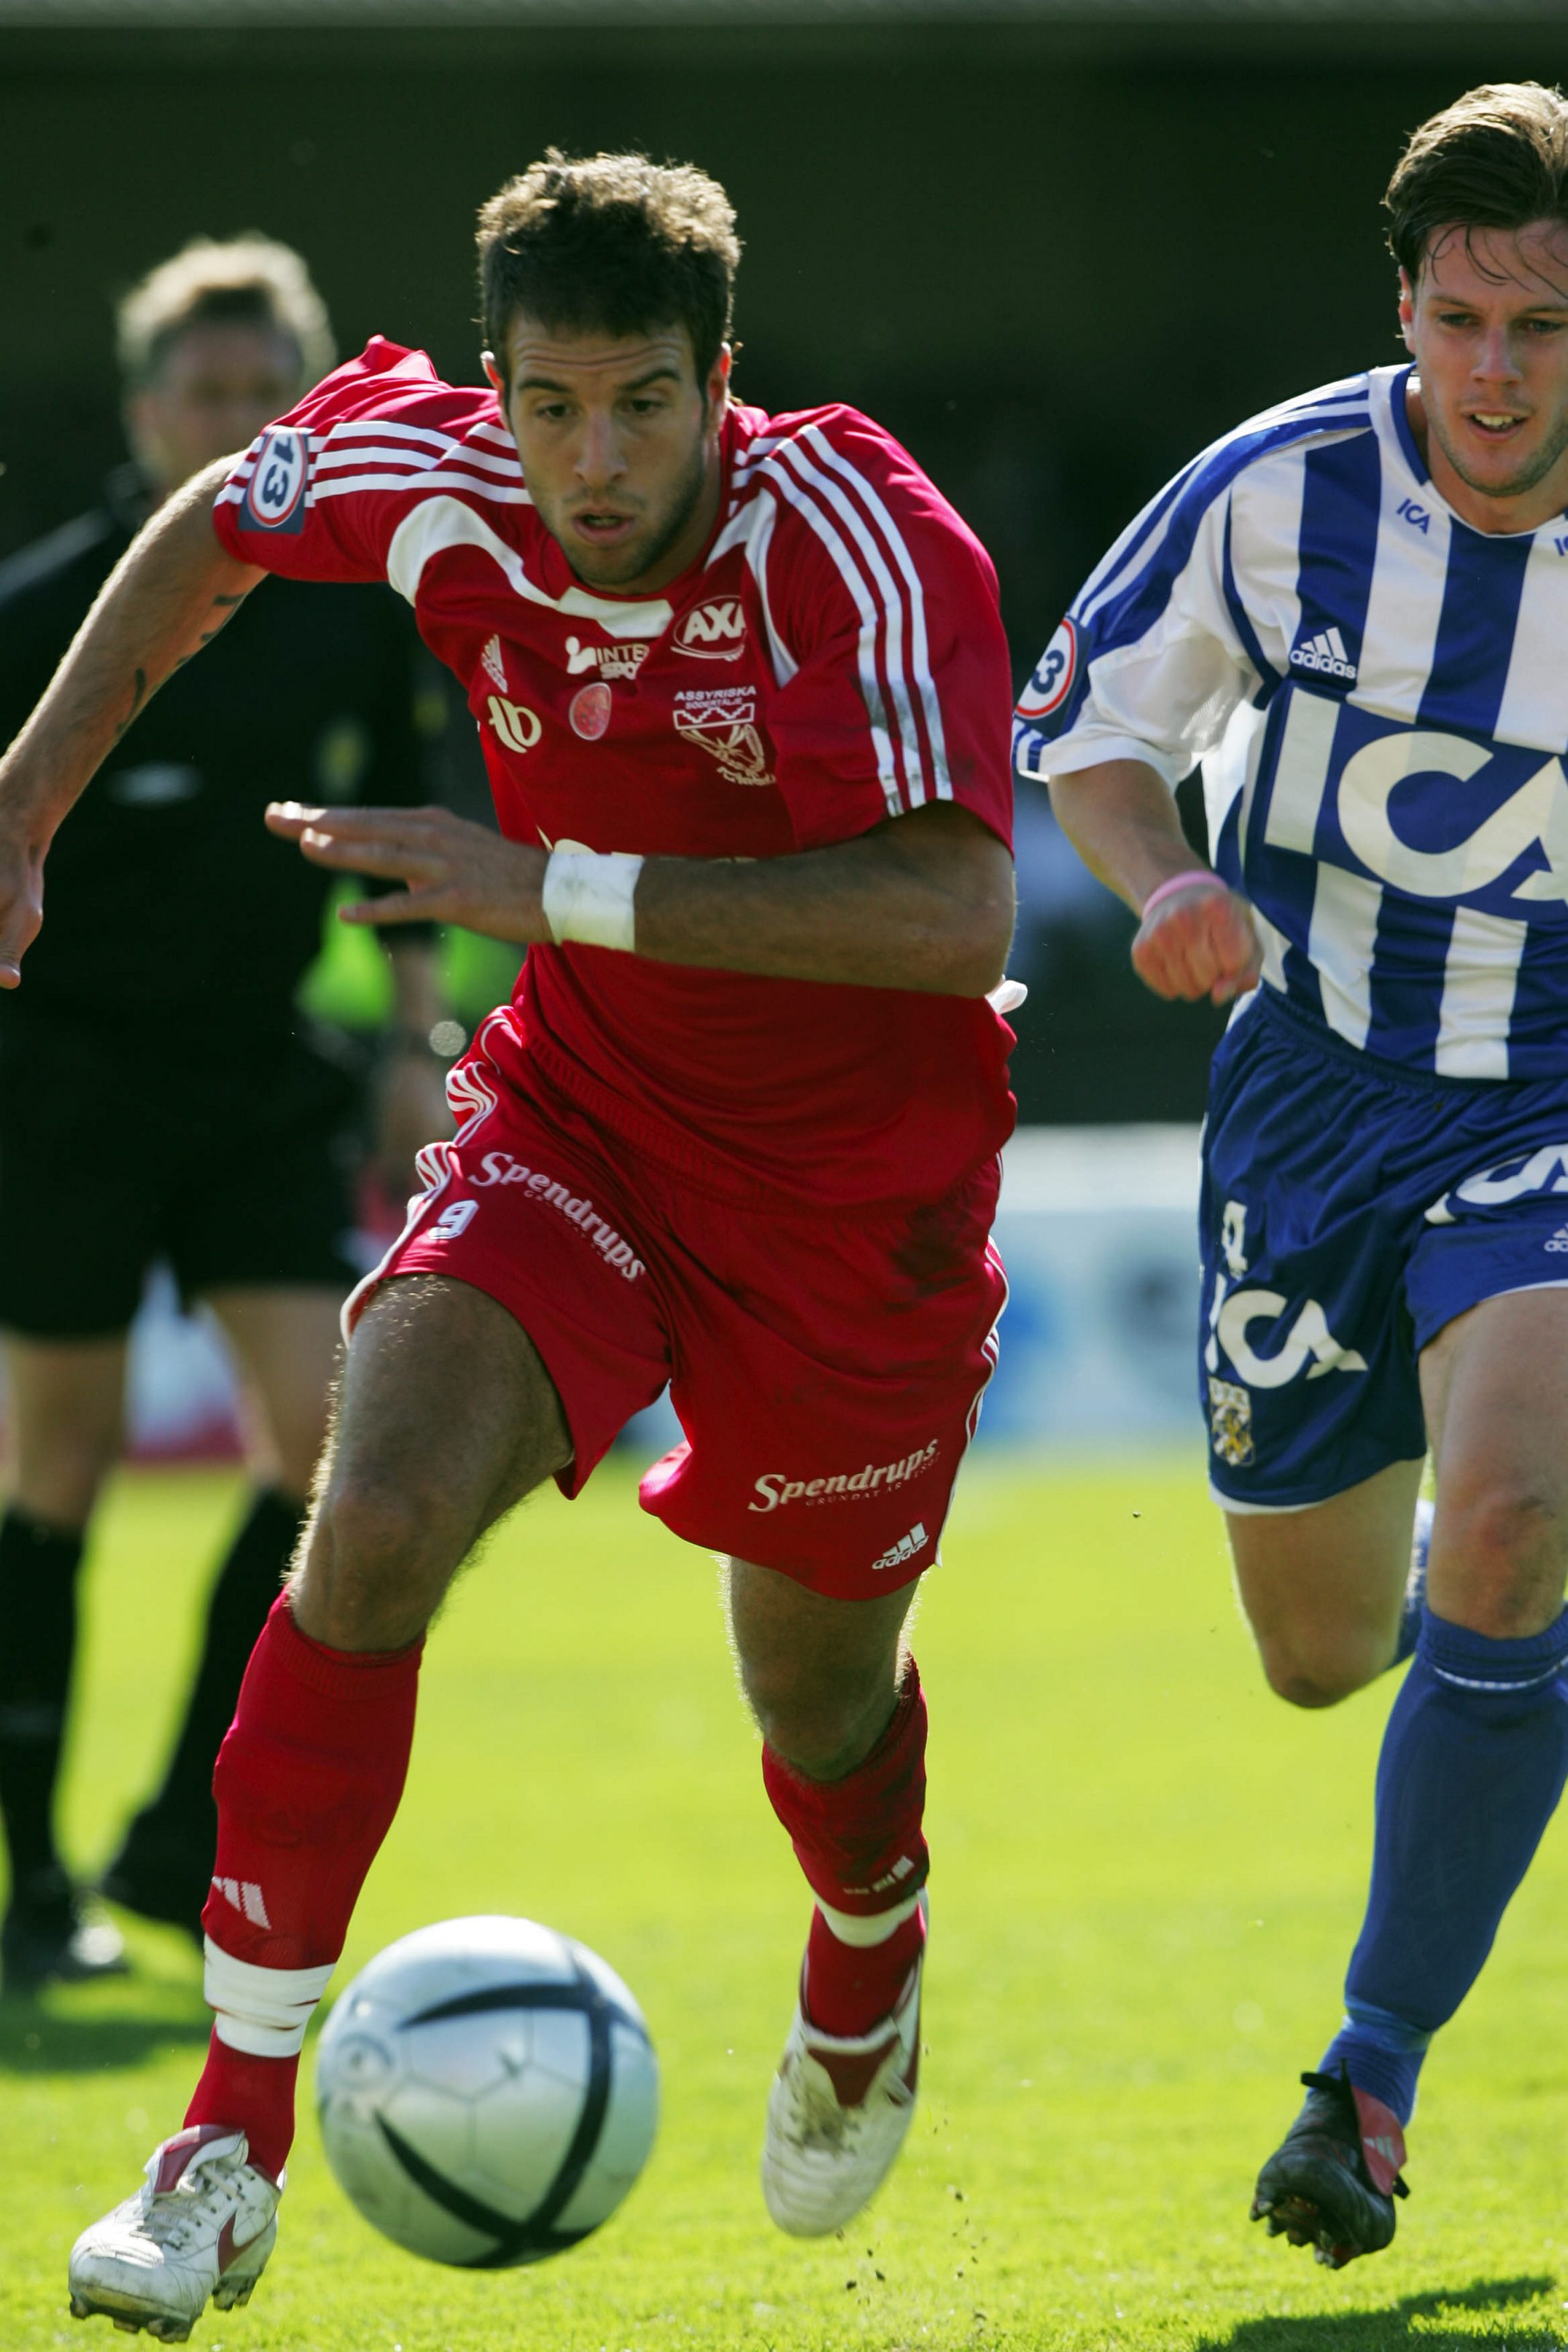 Andreas Haddad, Allsvenskan, Örebro SK